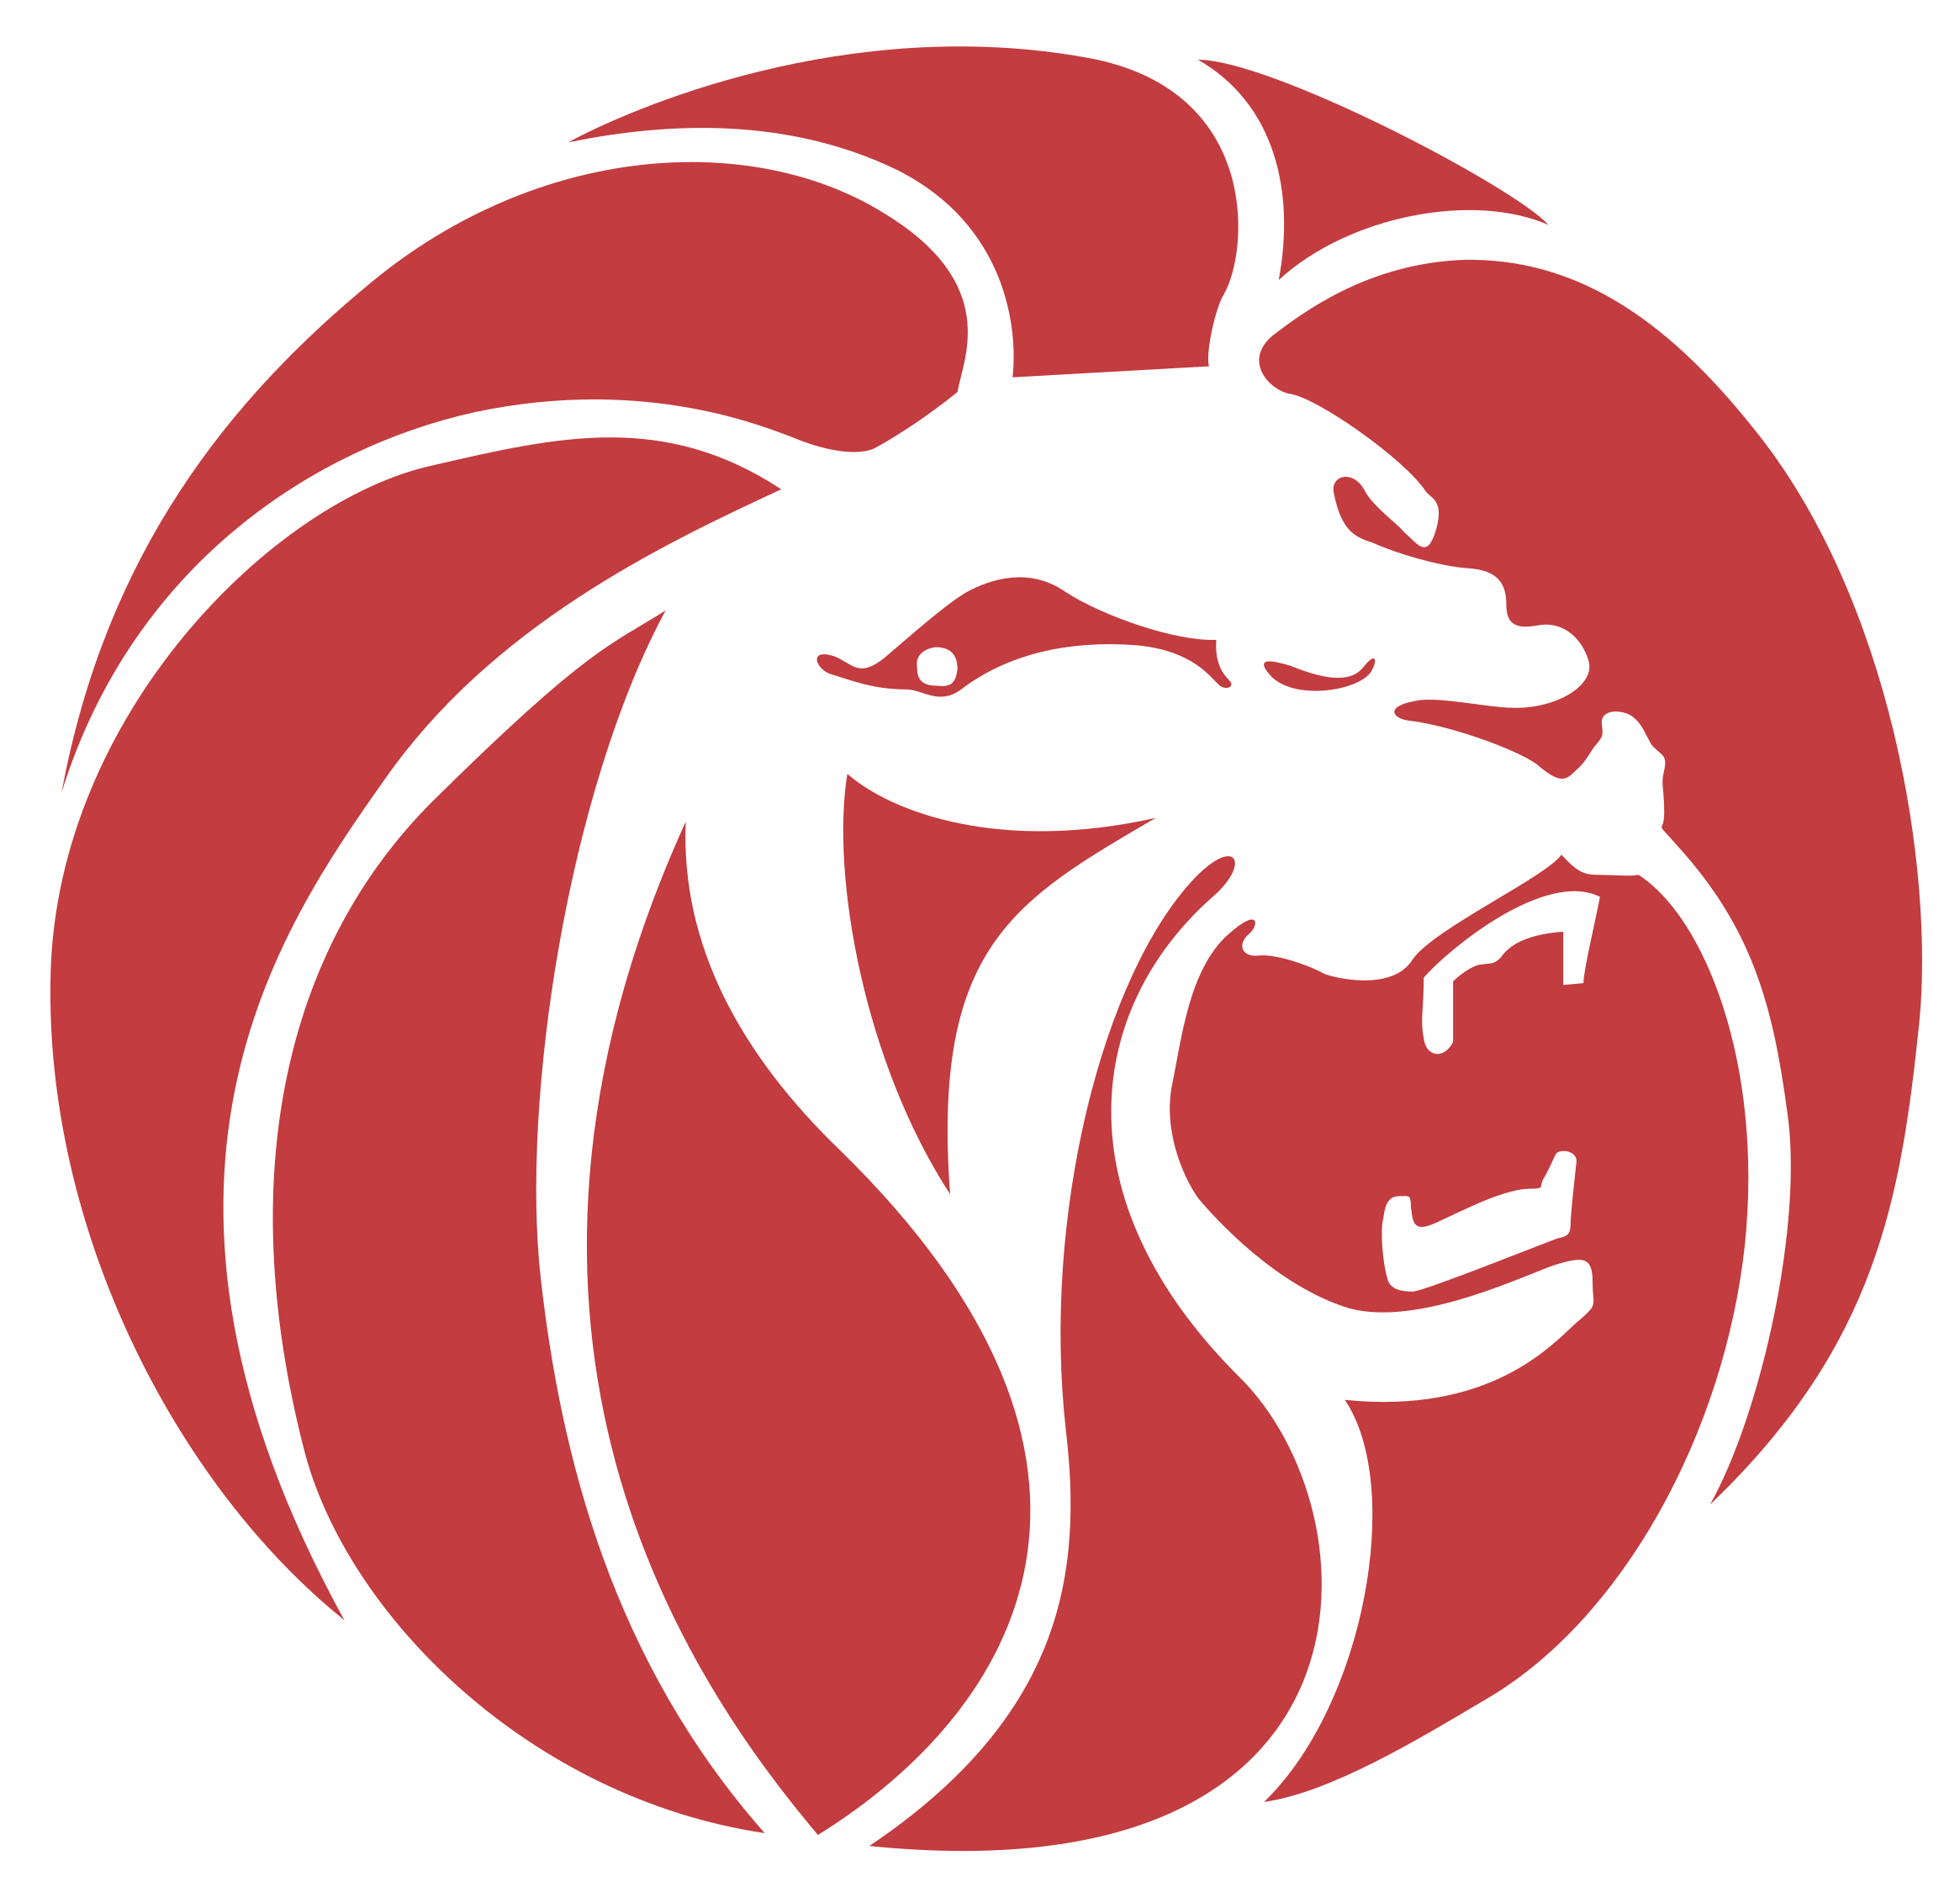 Mgm Grand Logo - Mgm Grand Lion Logo (2400x2400)